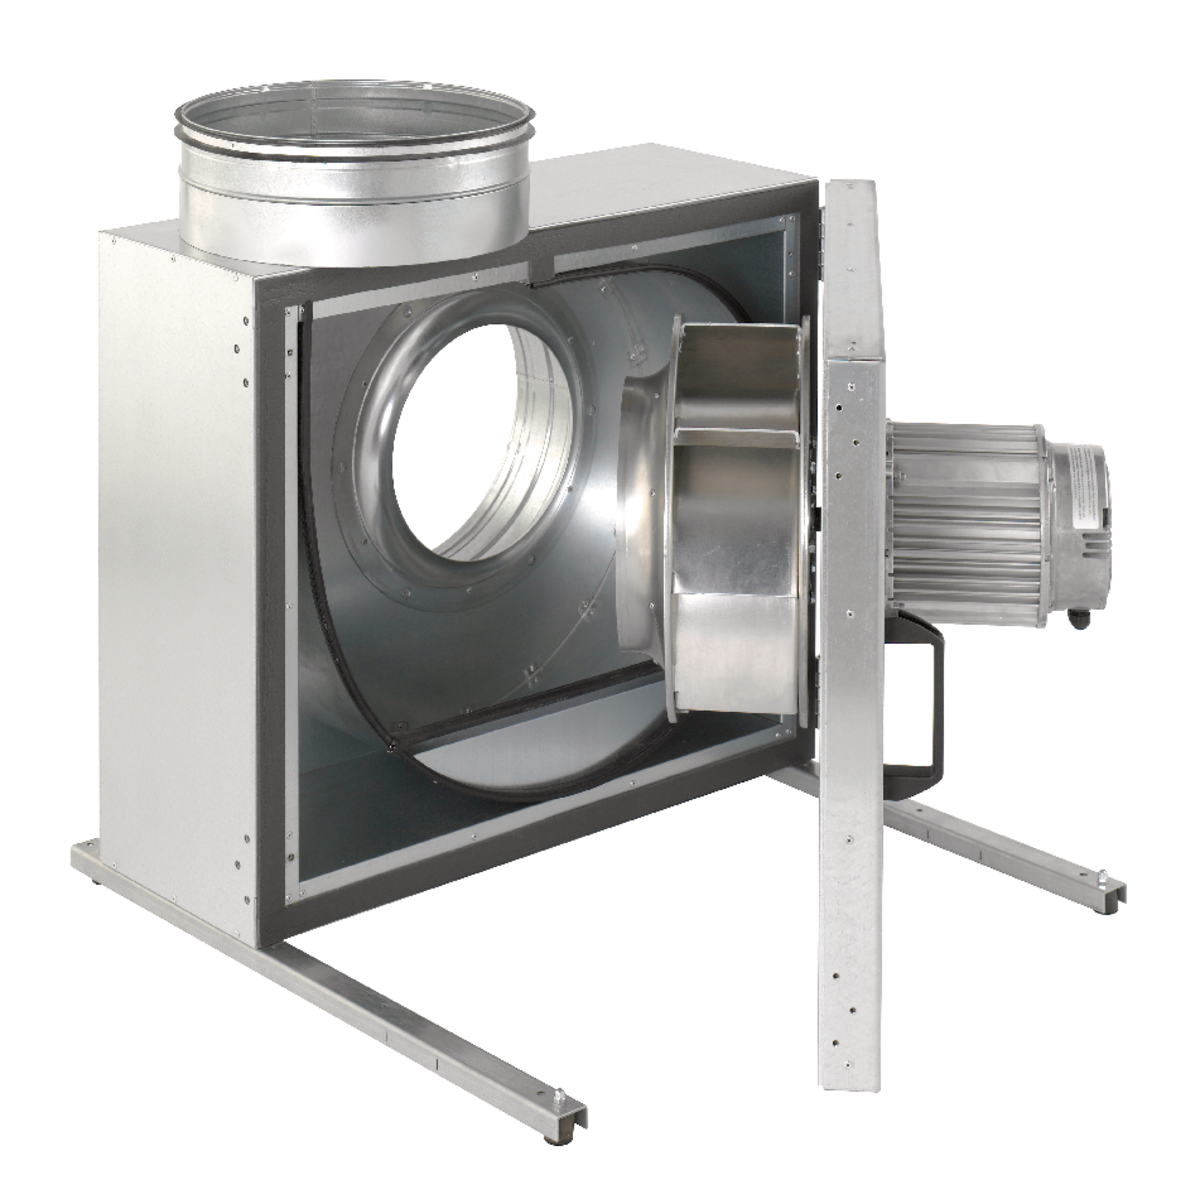 KBR - Centrifugale ventilatoren - Ventilatoren & Accessoires - Producten - Systemair